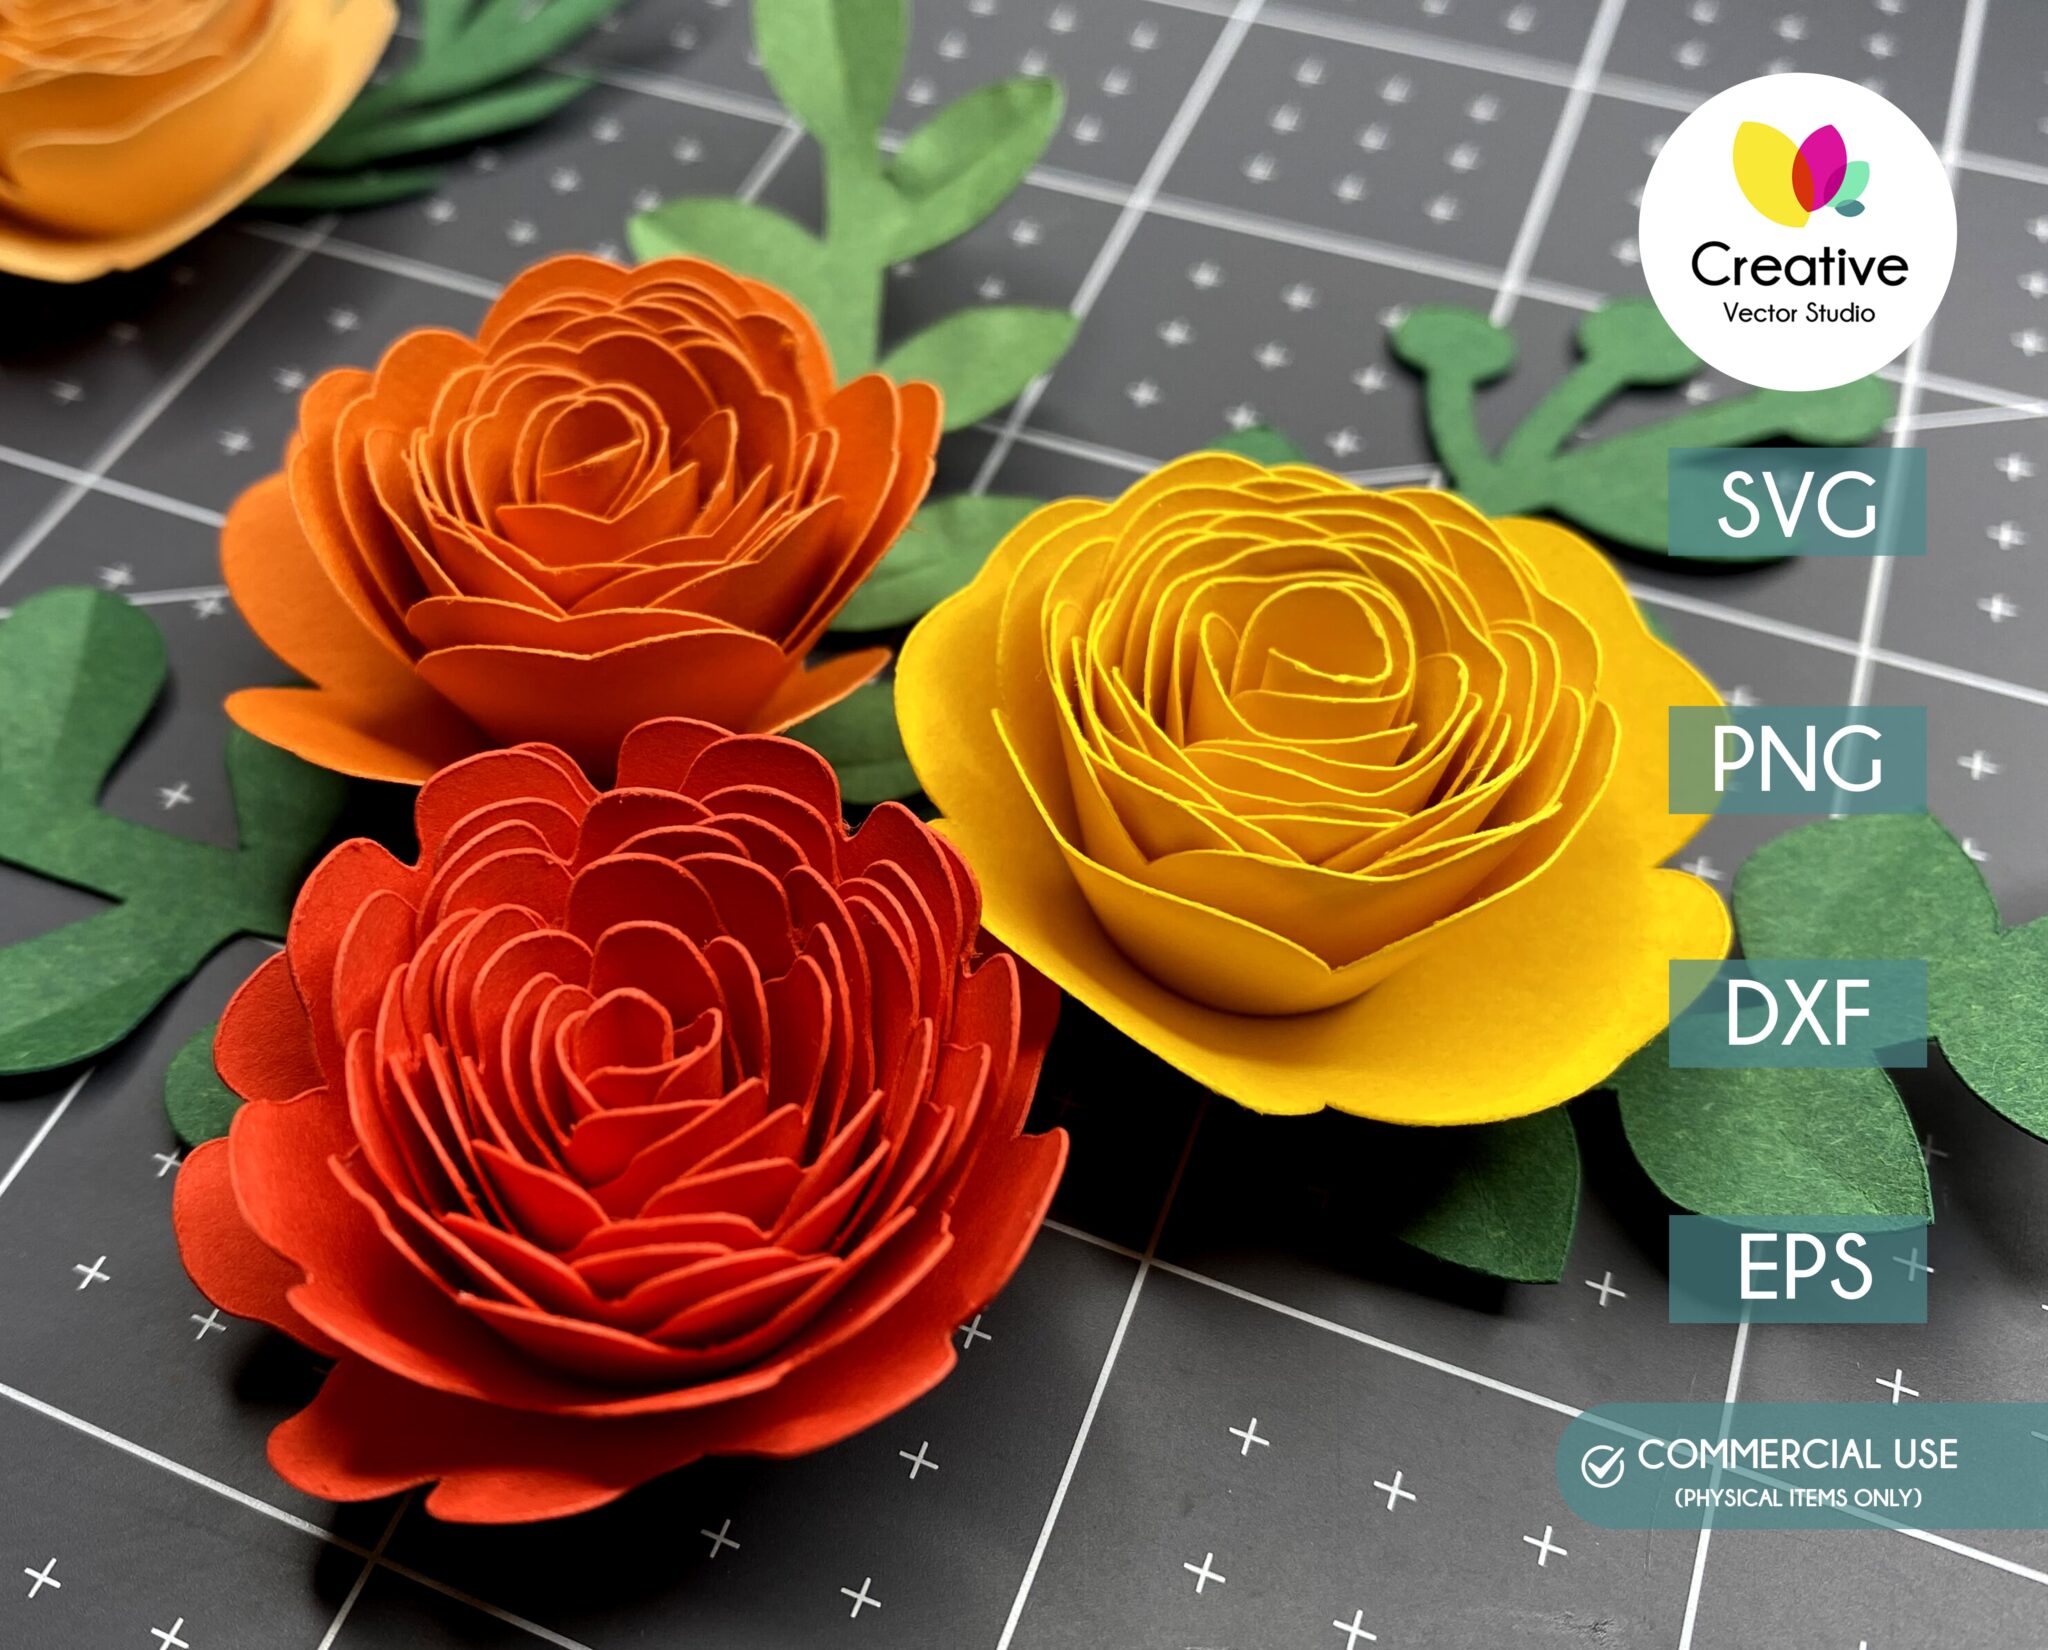 Rolled Flower SVG Bundle - Creative Vector Studio